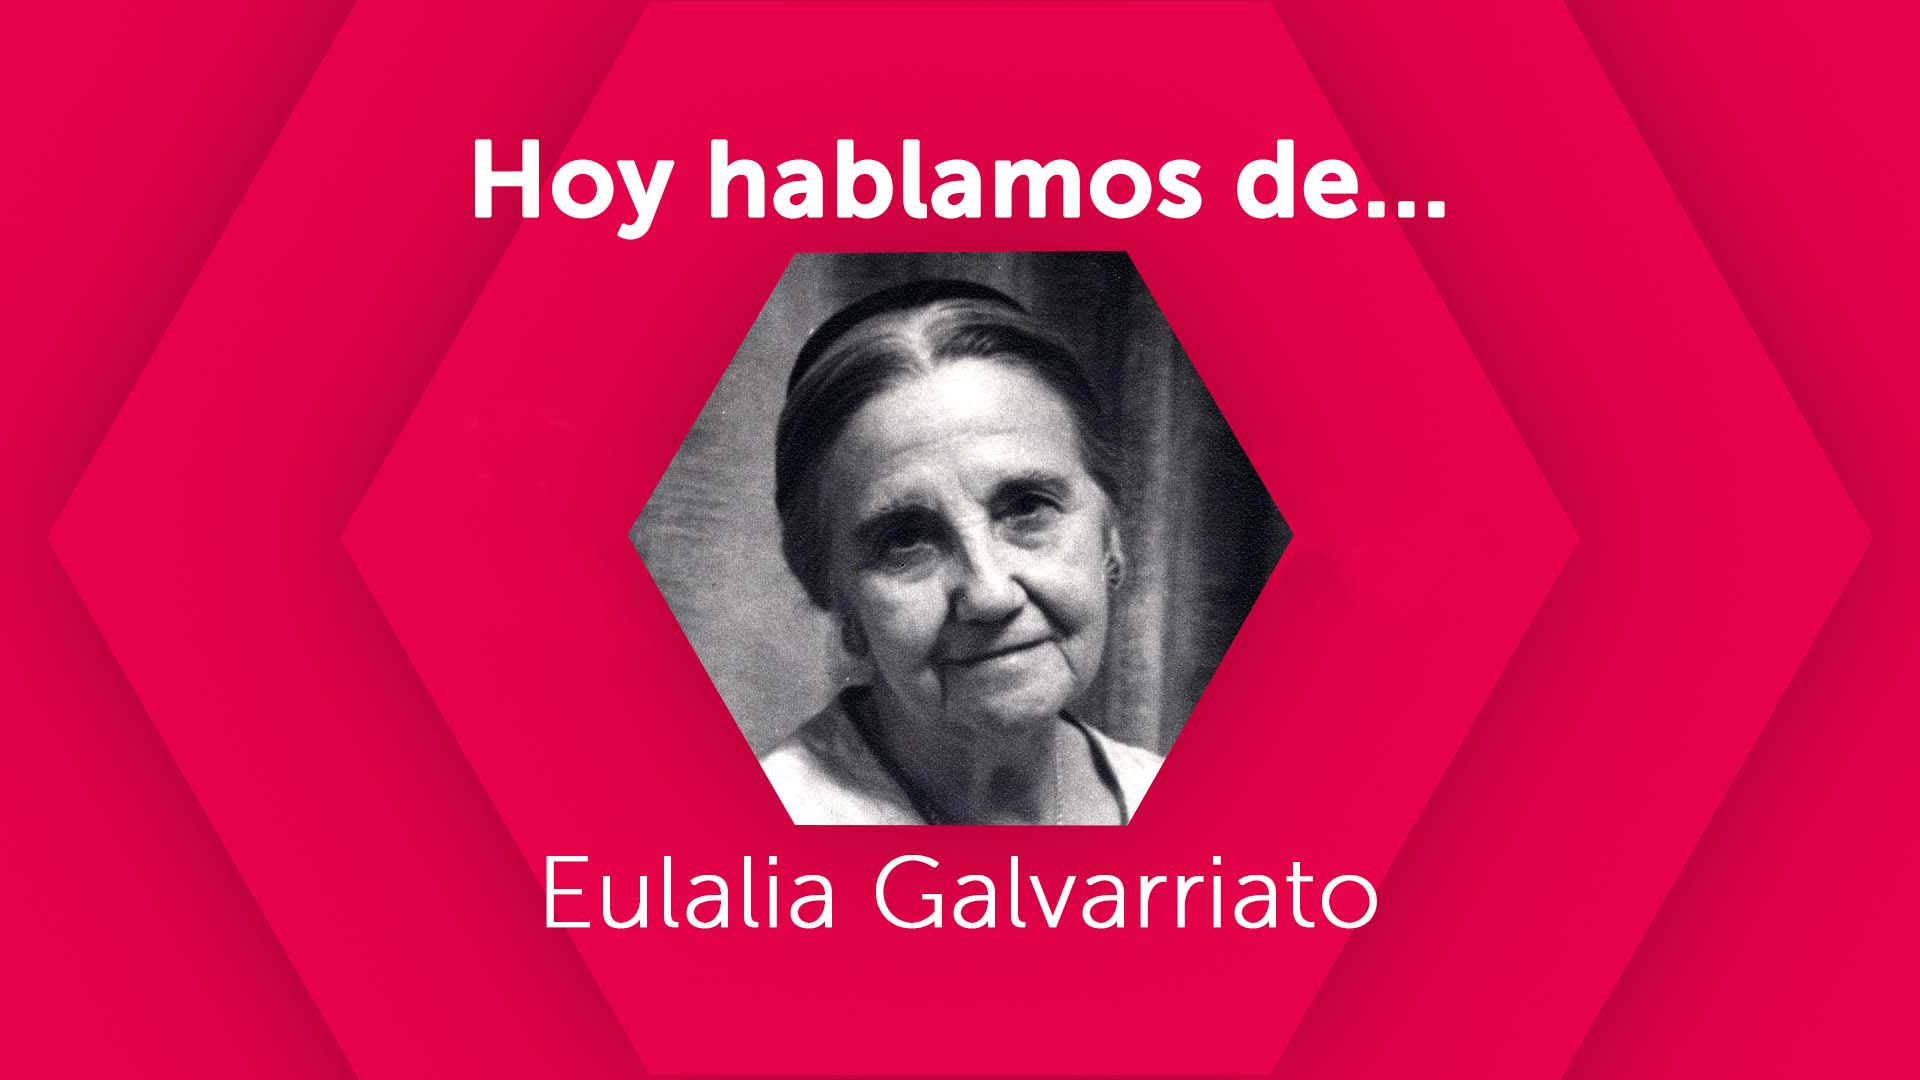 Hoy hablamos de Eulalia Galvarriato